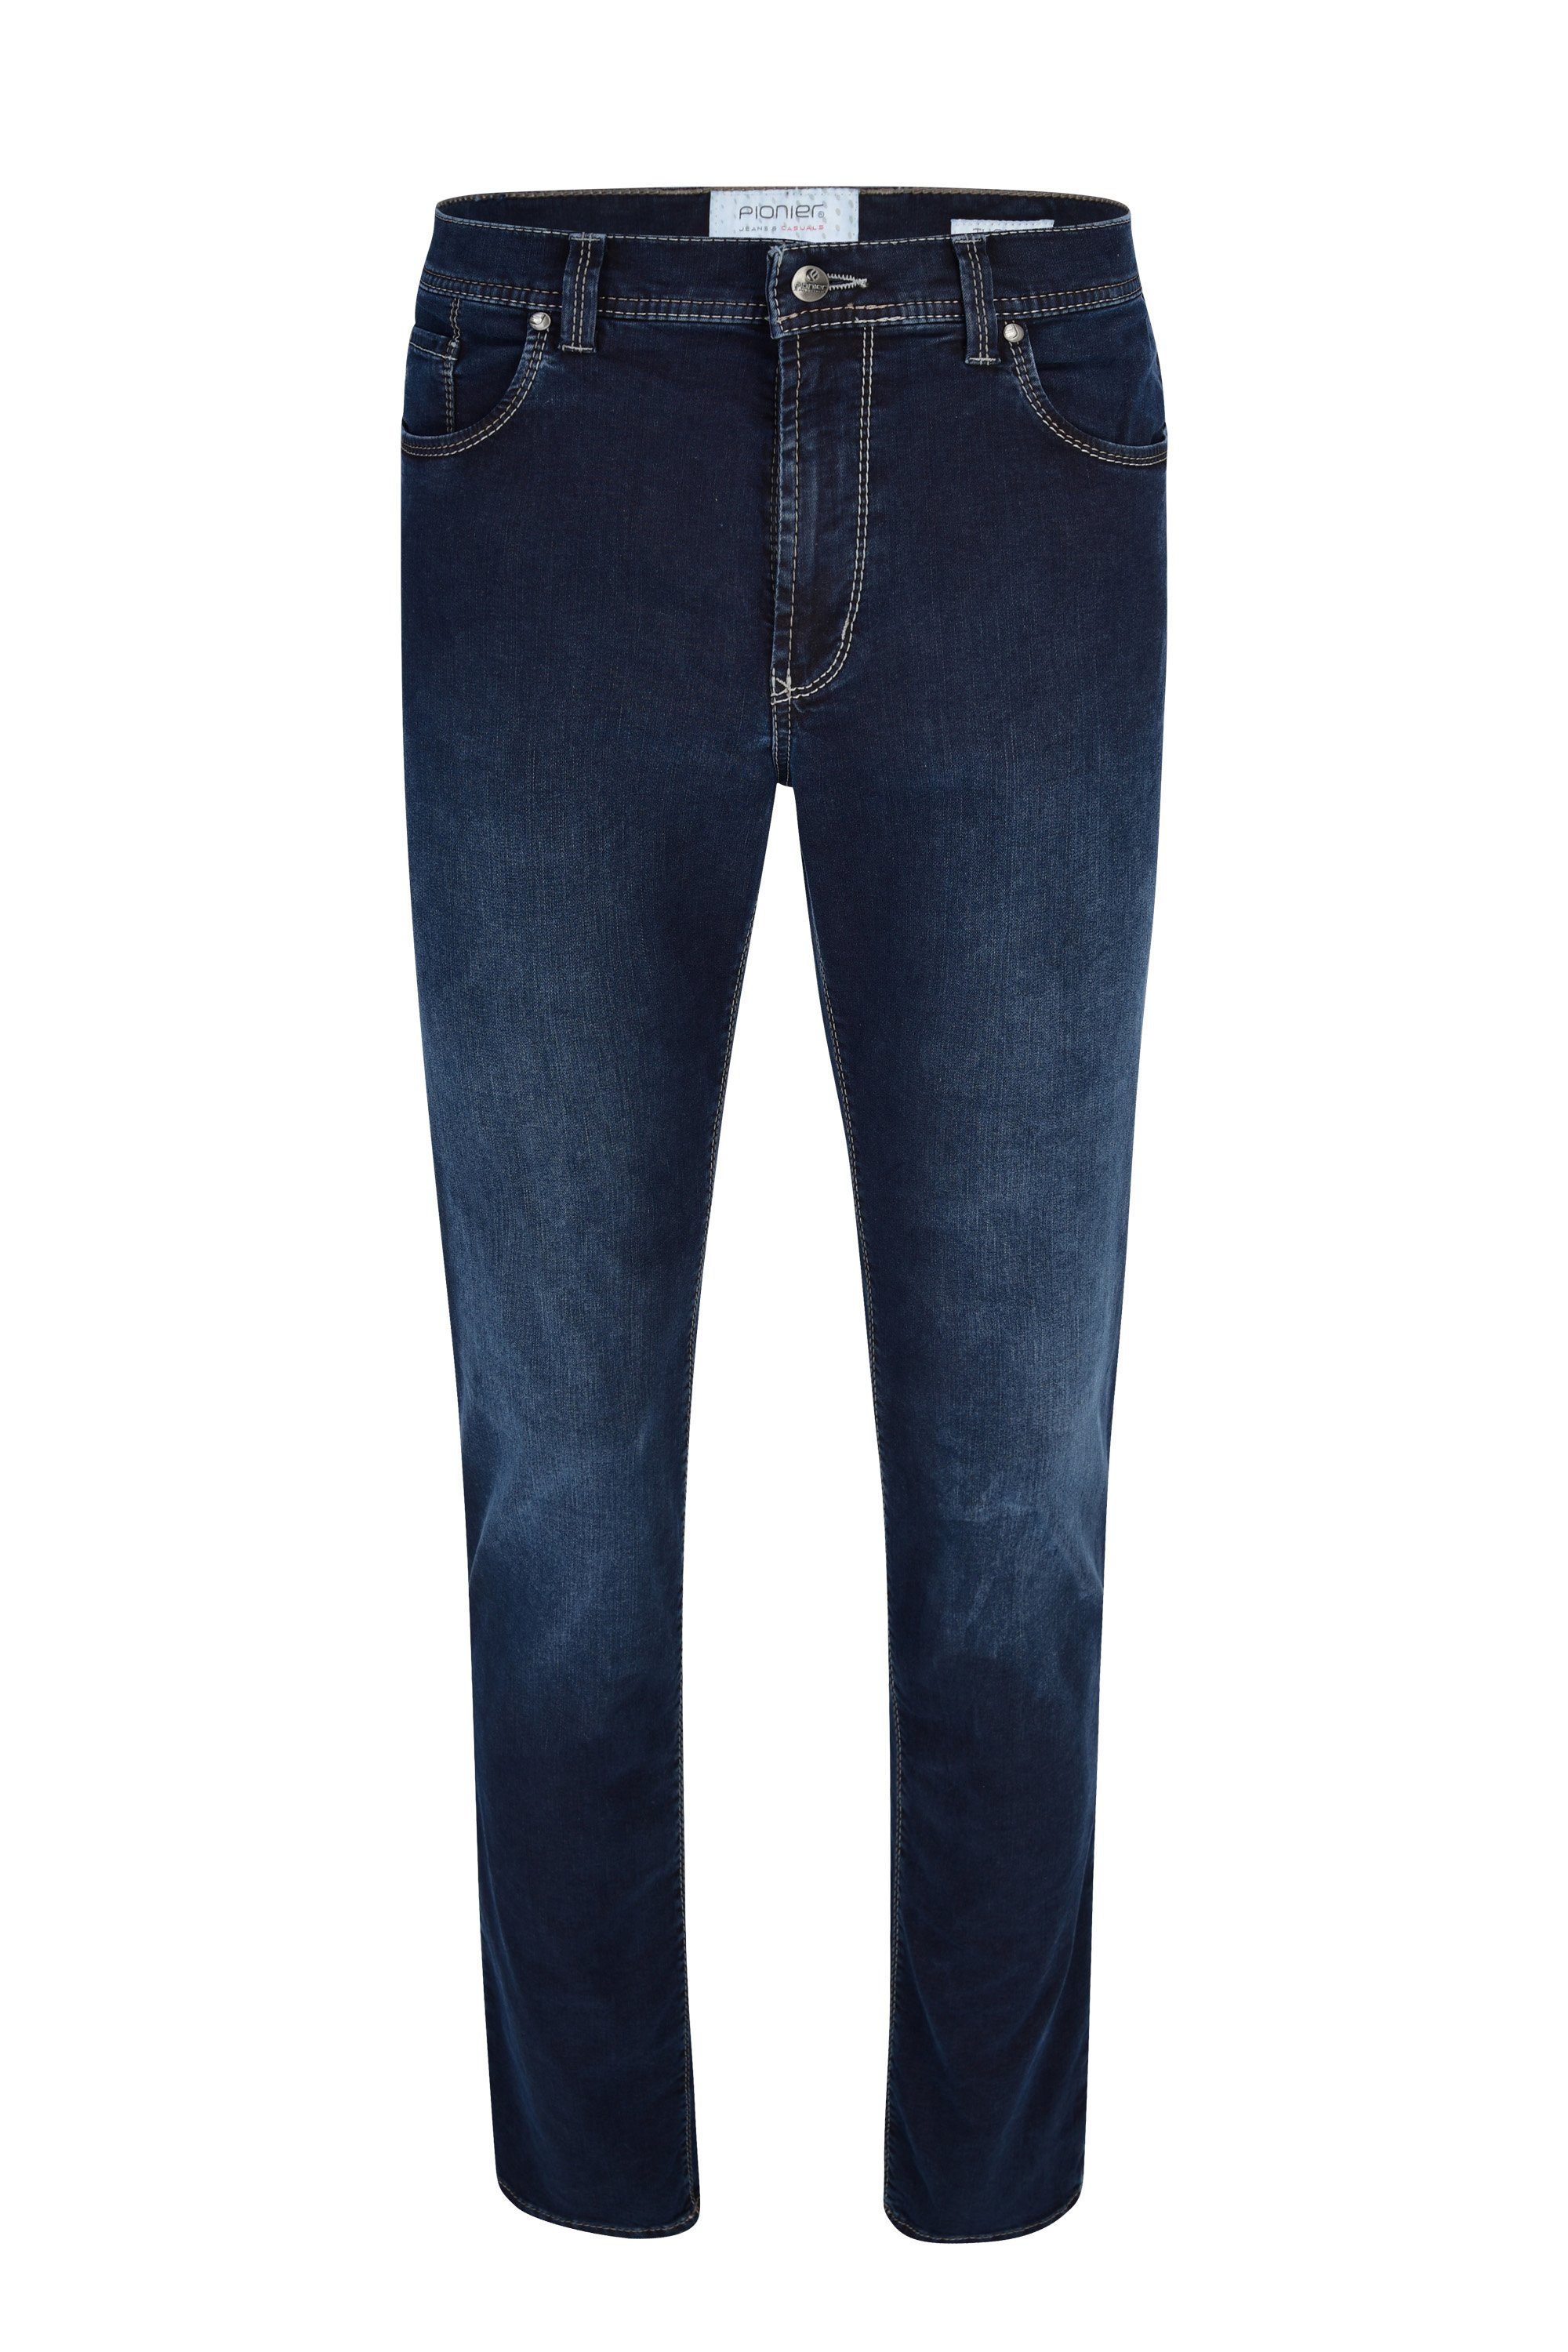 5-Pocket-Jeans 6101.665 2079 Pionier dark blue PIONIER THOMAS